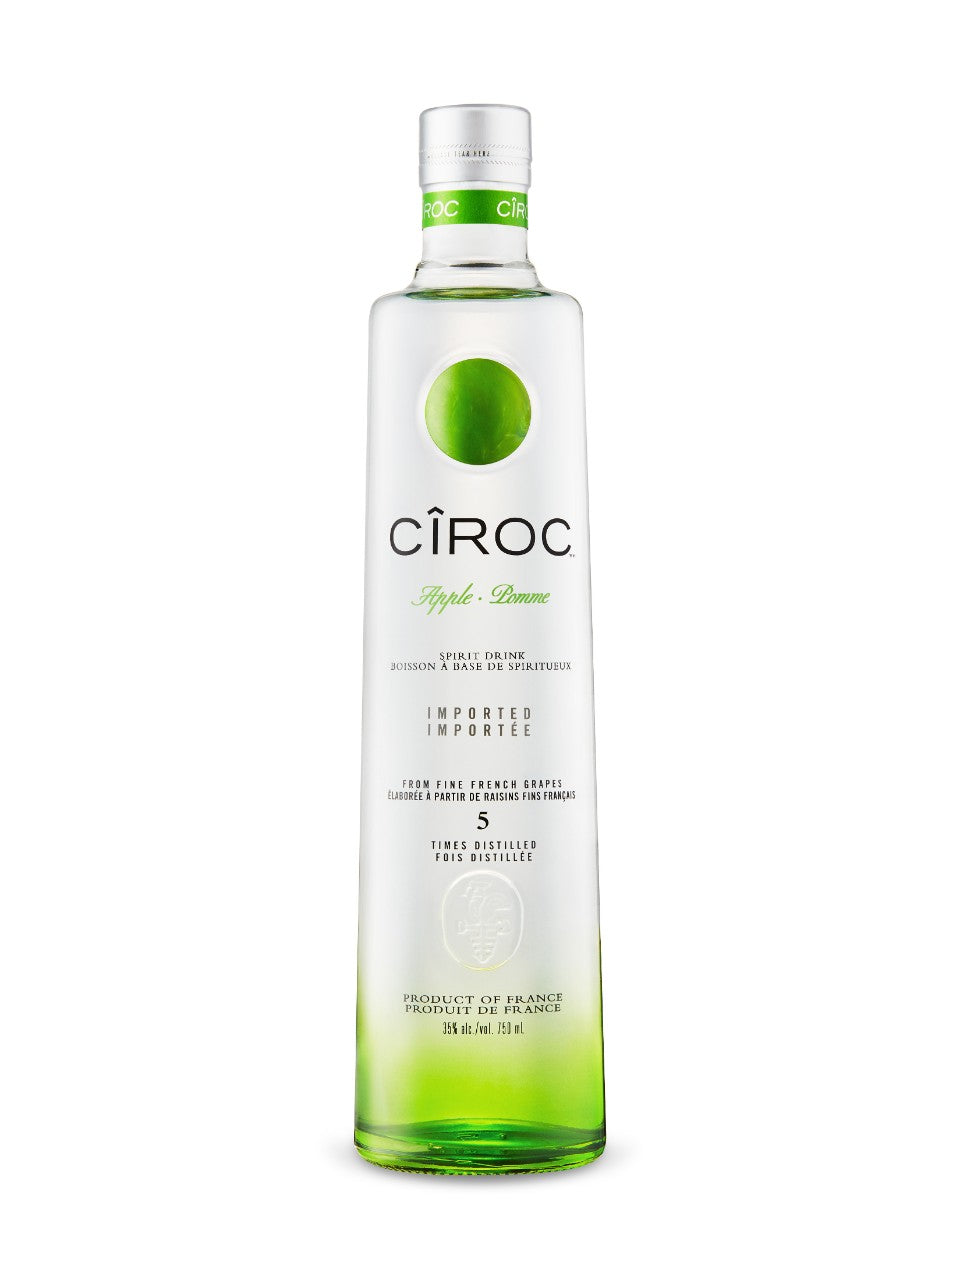 Ciroc Apple 750 mL bottle